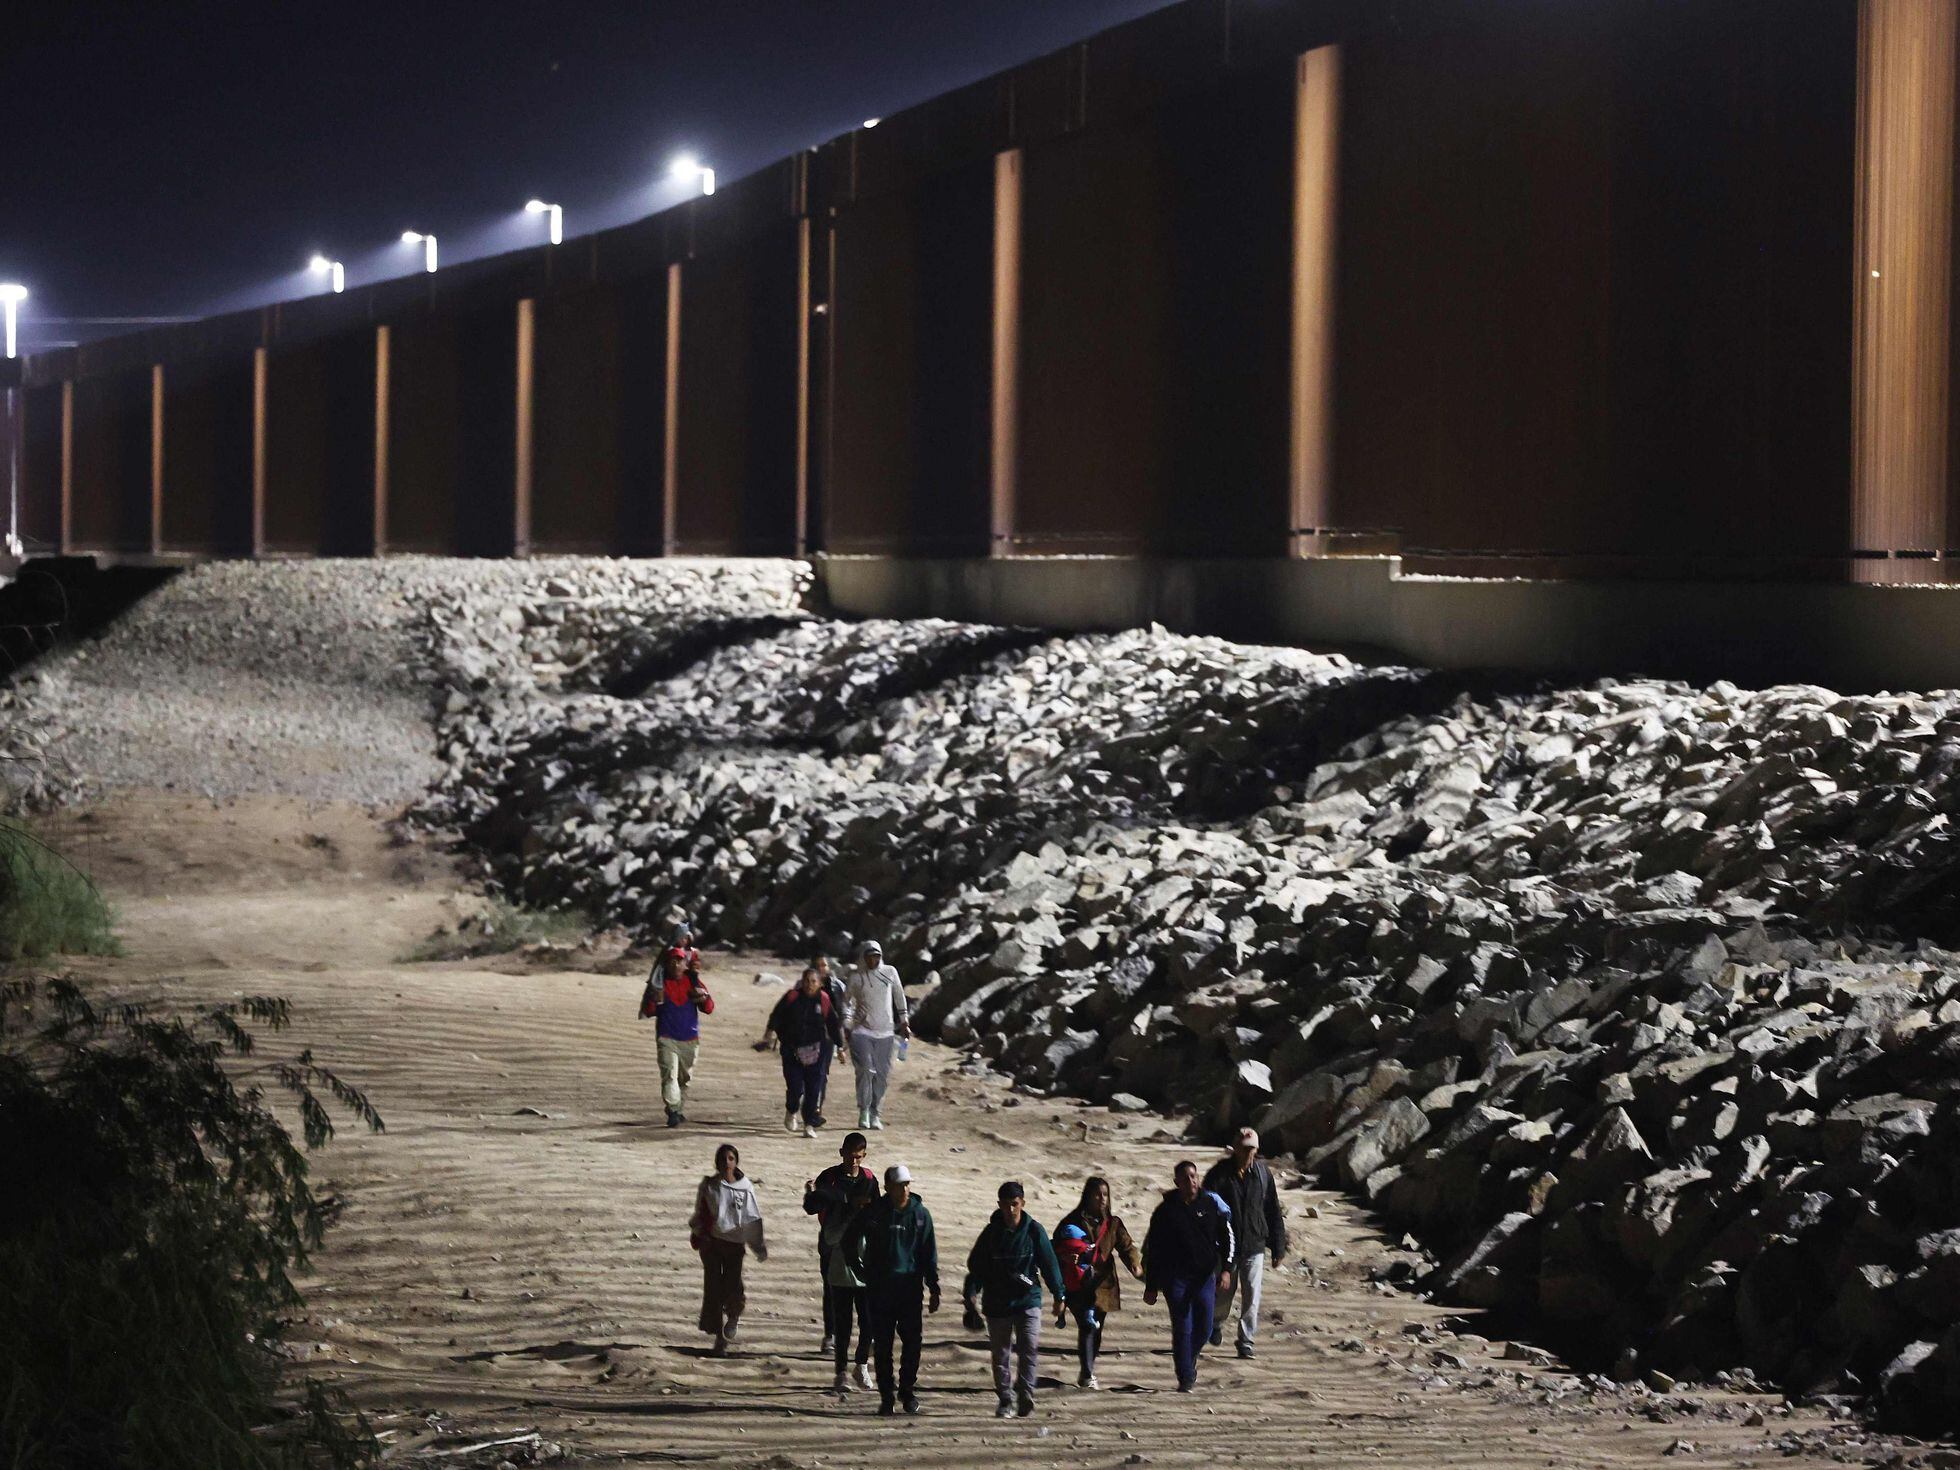 U.S. border officials are closing a remote Arizona crossing